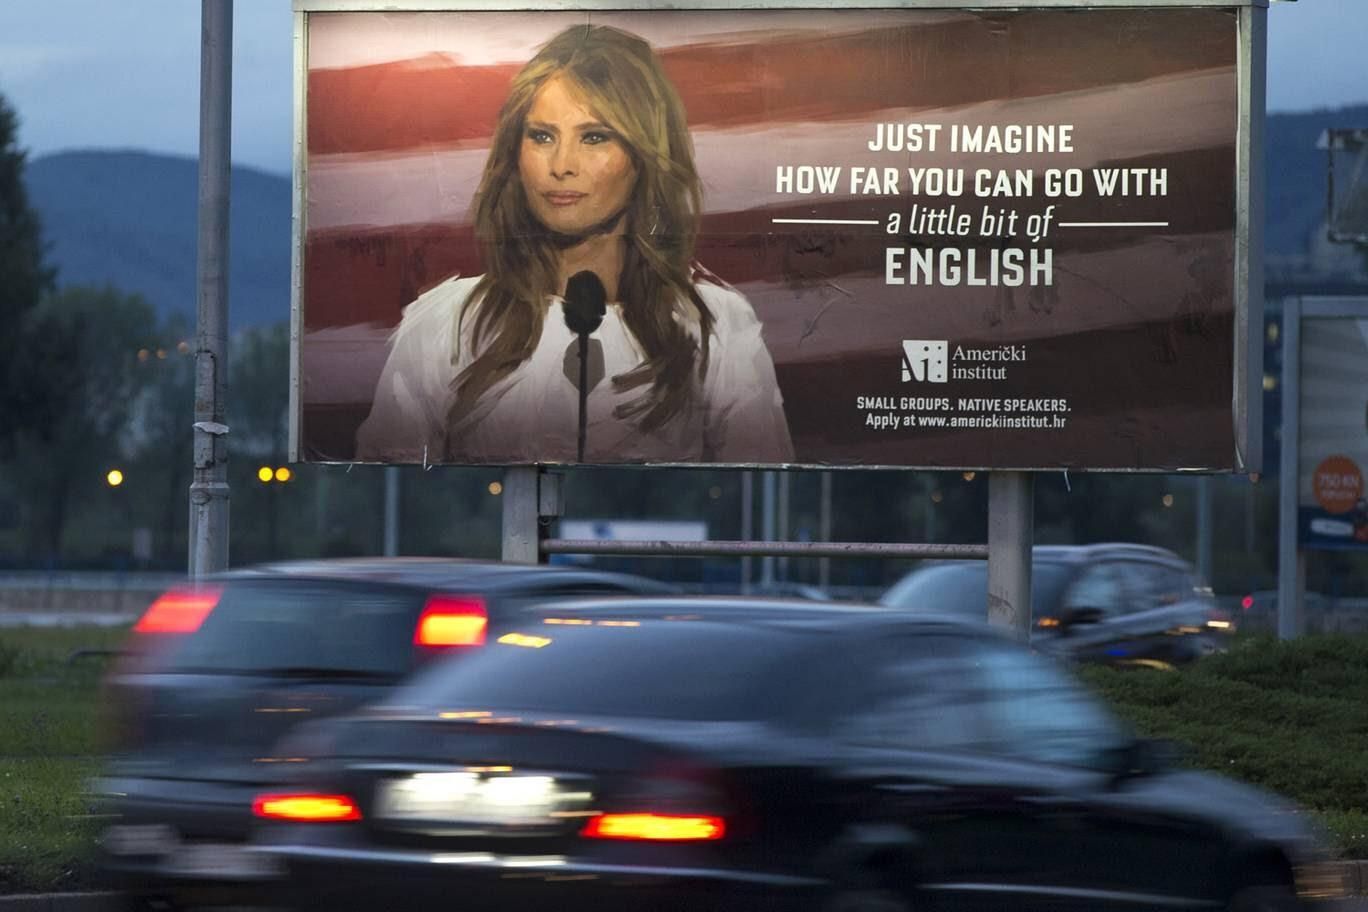 A Croatian language school advertisement.